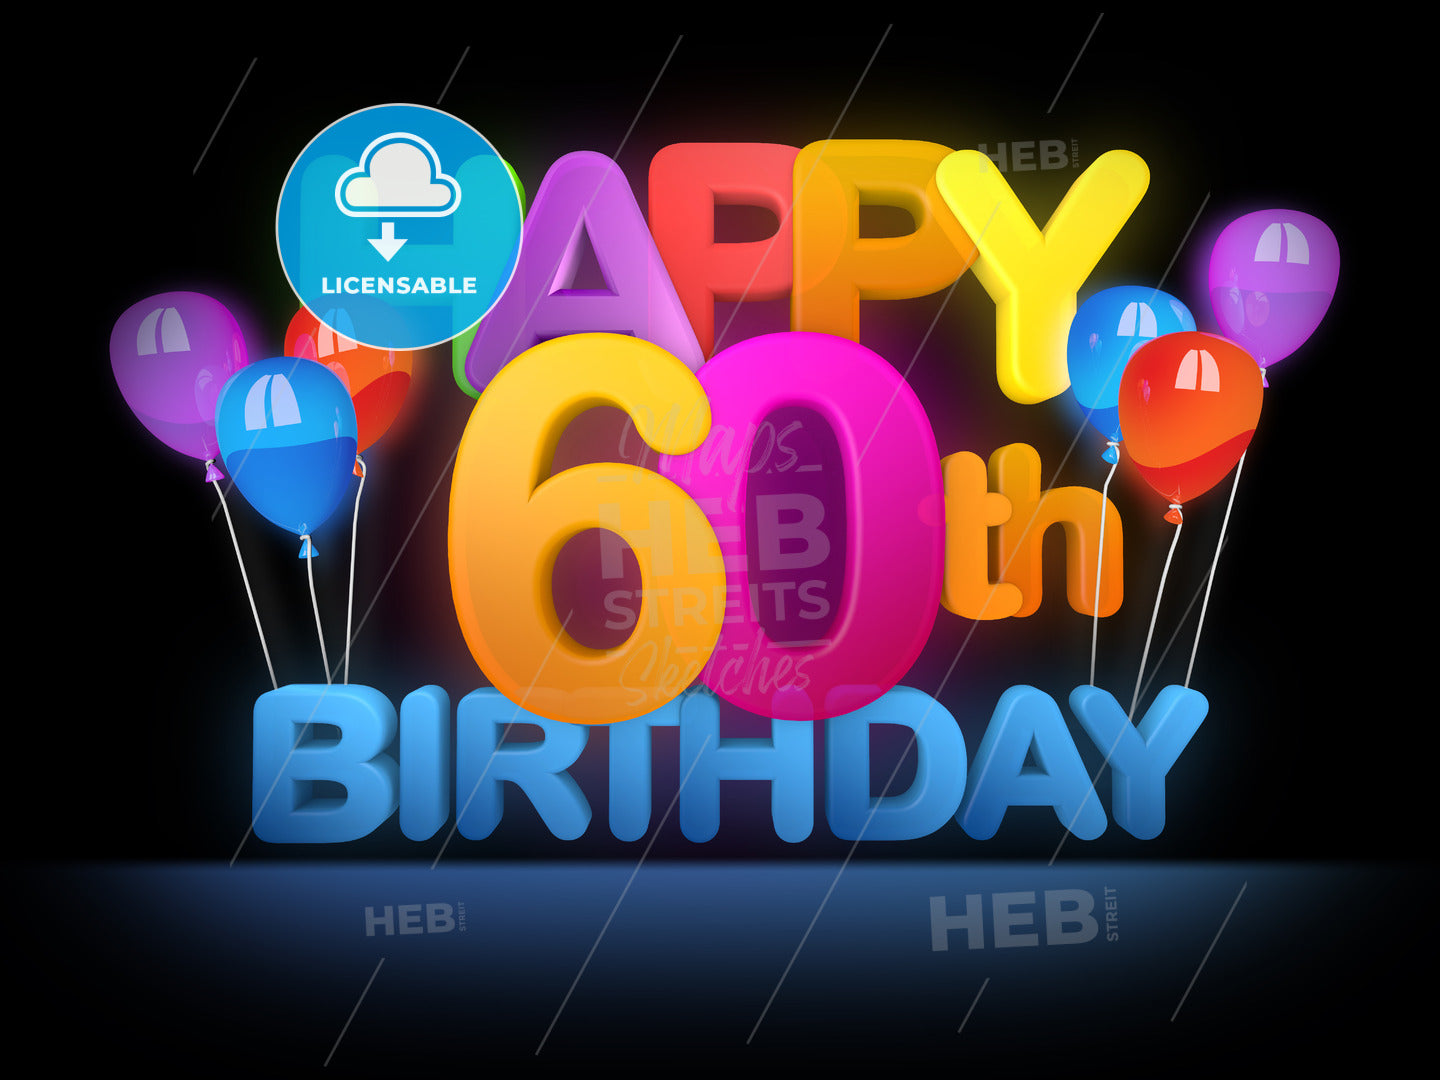 Happy 60th Birthday, dark – instant download